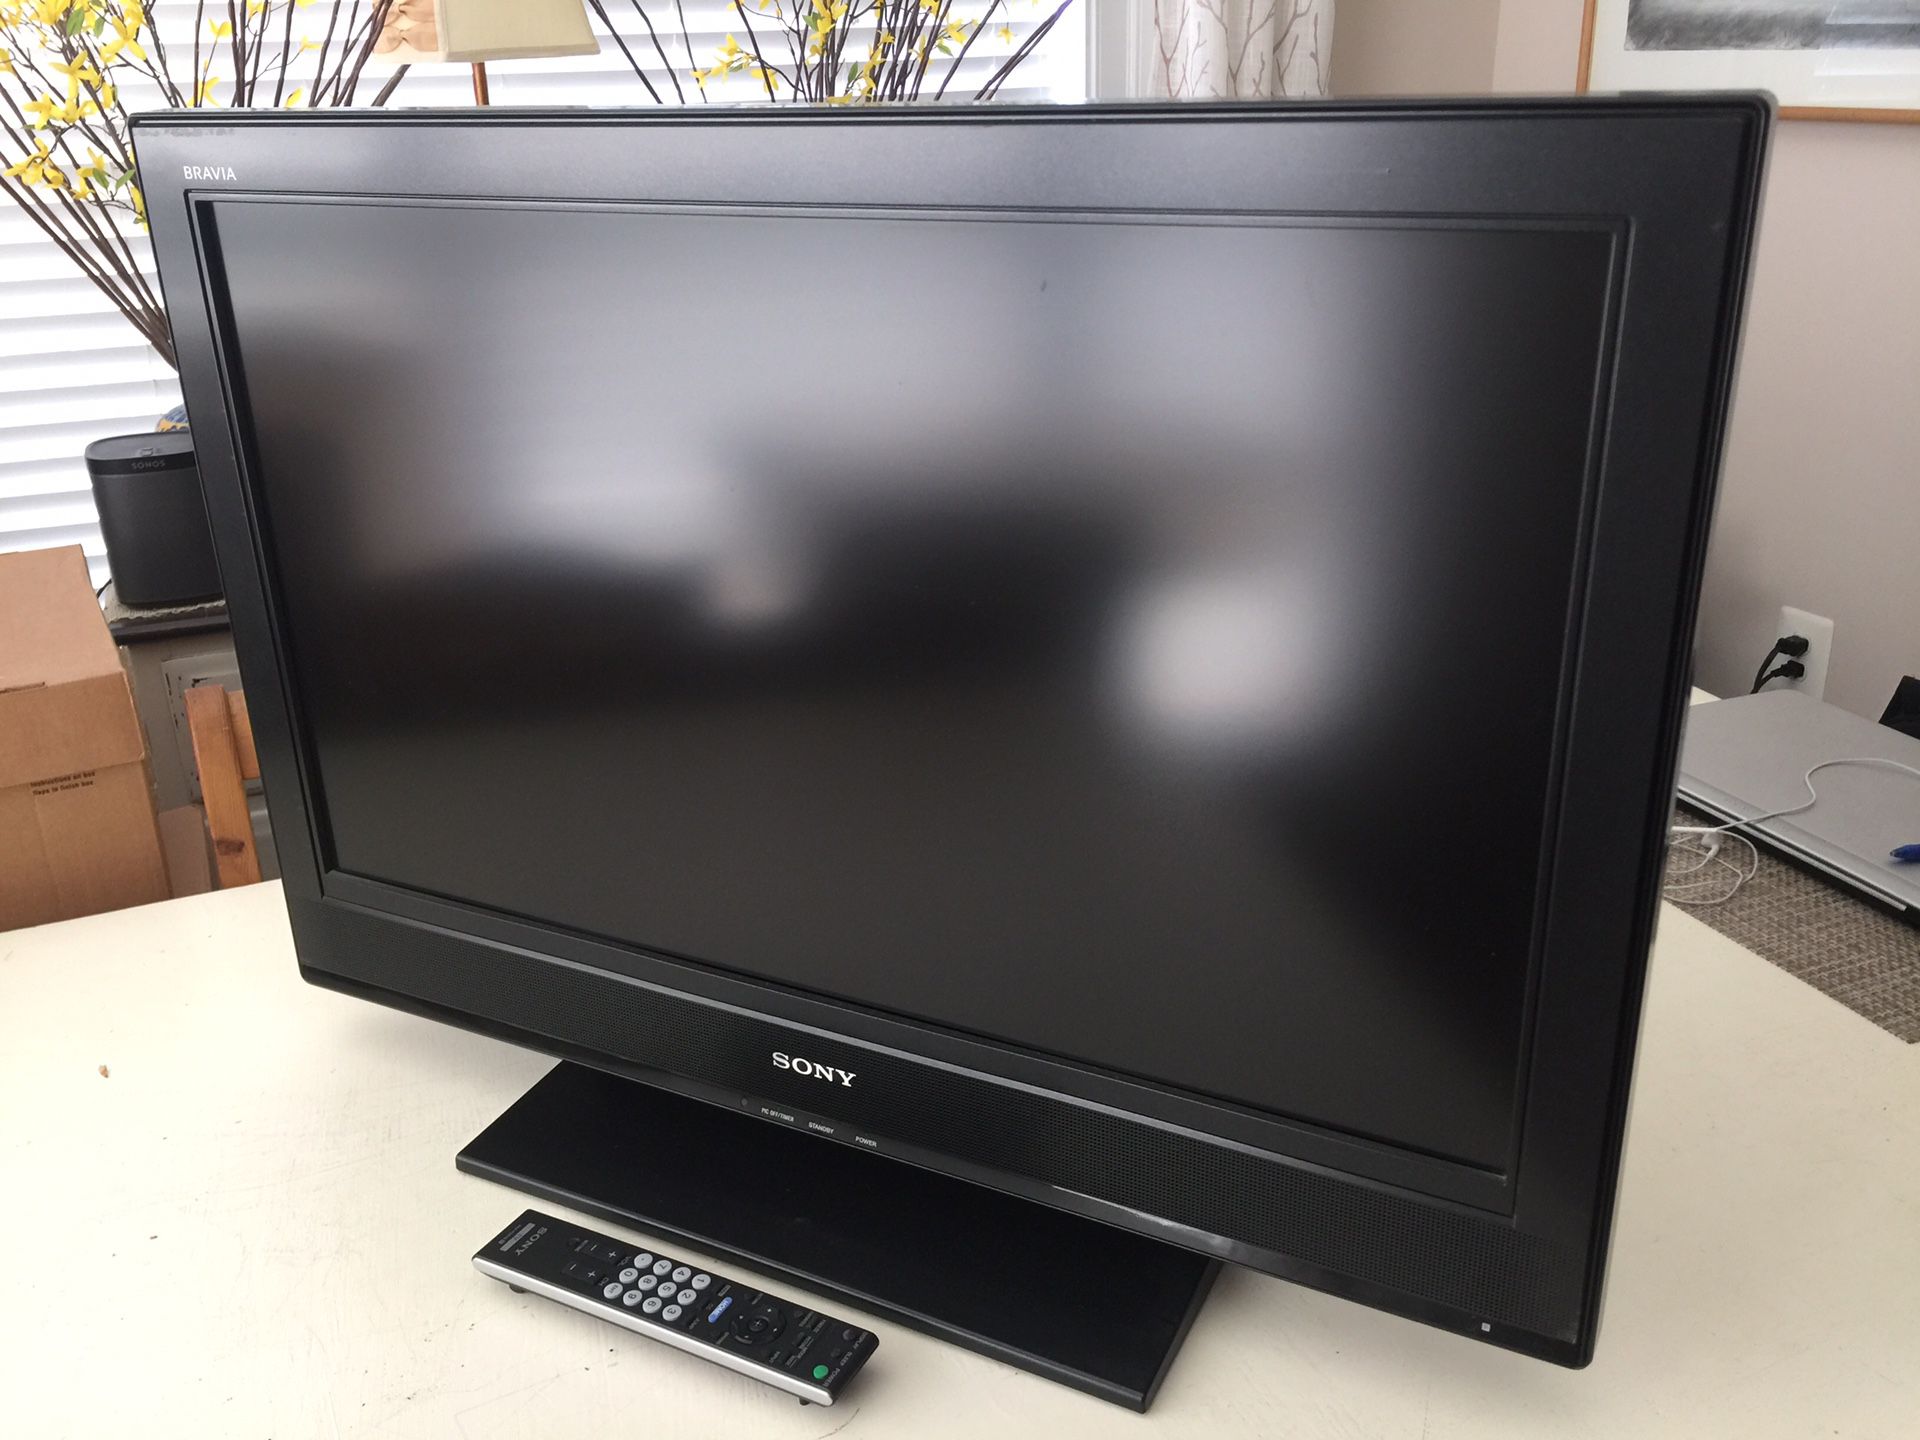 Sony Bravia S-Series KDL-32S3000 32” 1080P LCD HD TV